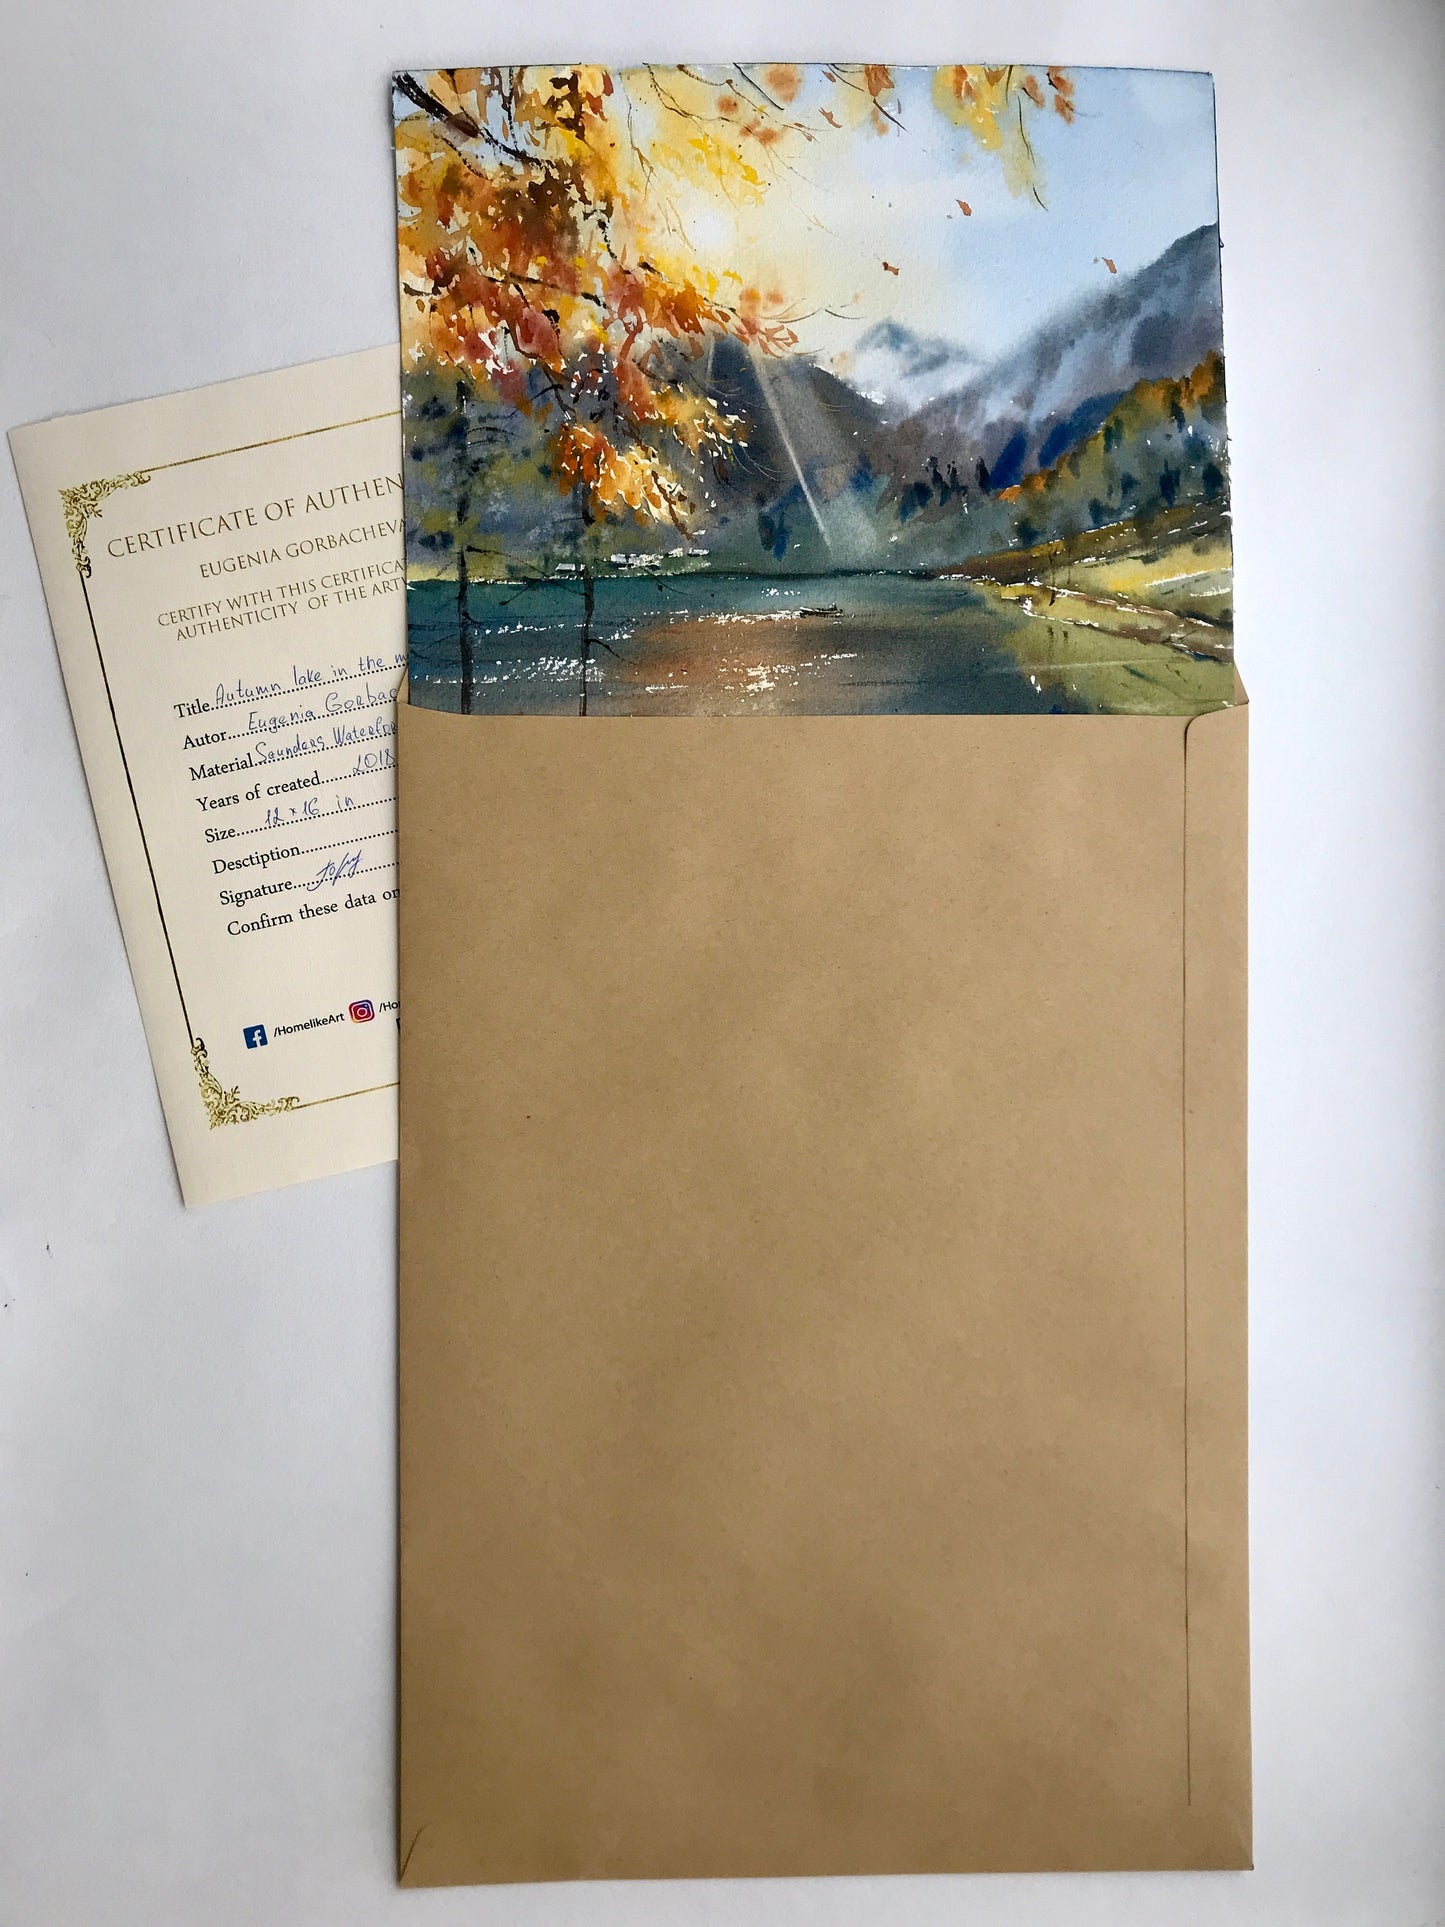 Foggy Morning Landscape Painting Original, Modern Watercolor Artwork, Misty Mountain Wall Art, Orange Sunrise, Gift